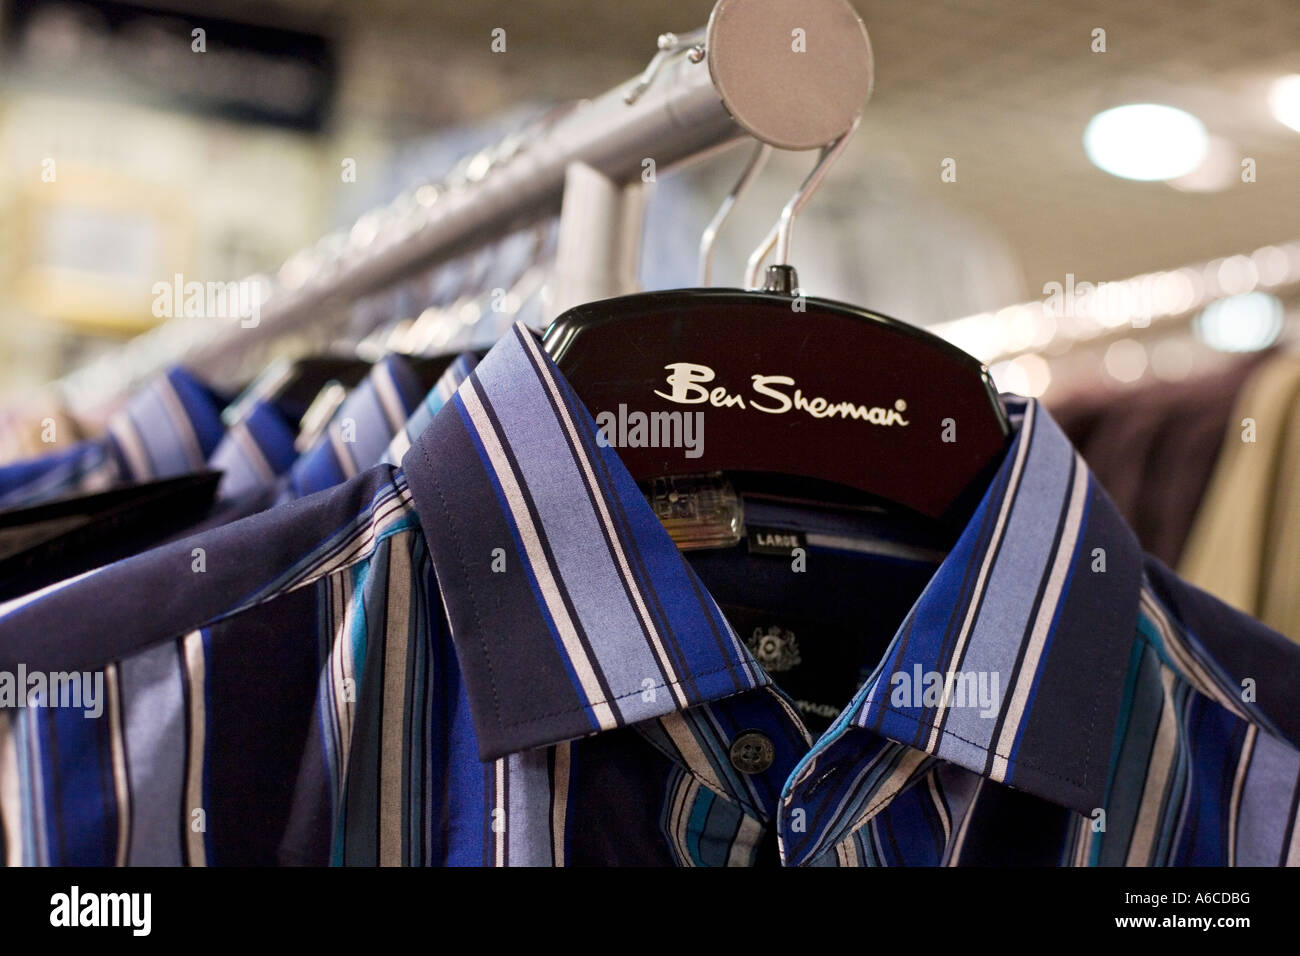 Ben Sherman shirts on hangers on rack Stock Photo - Alamy